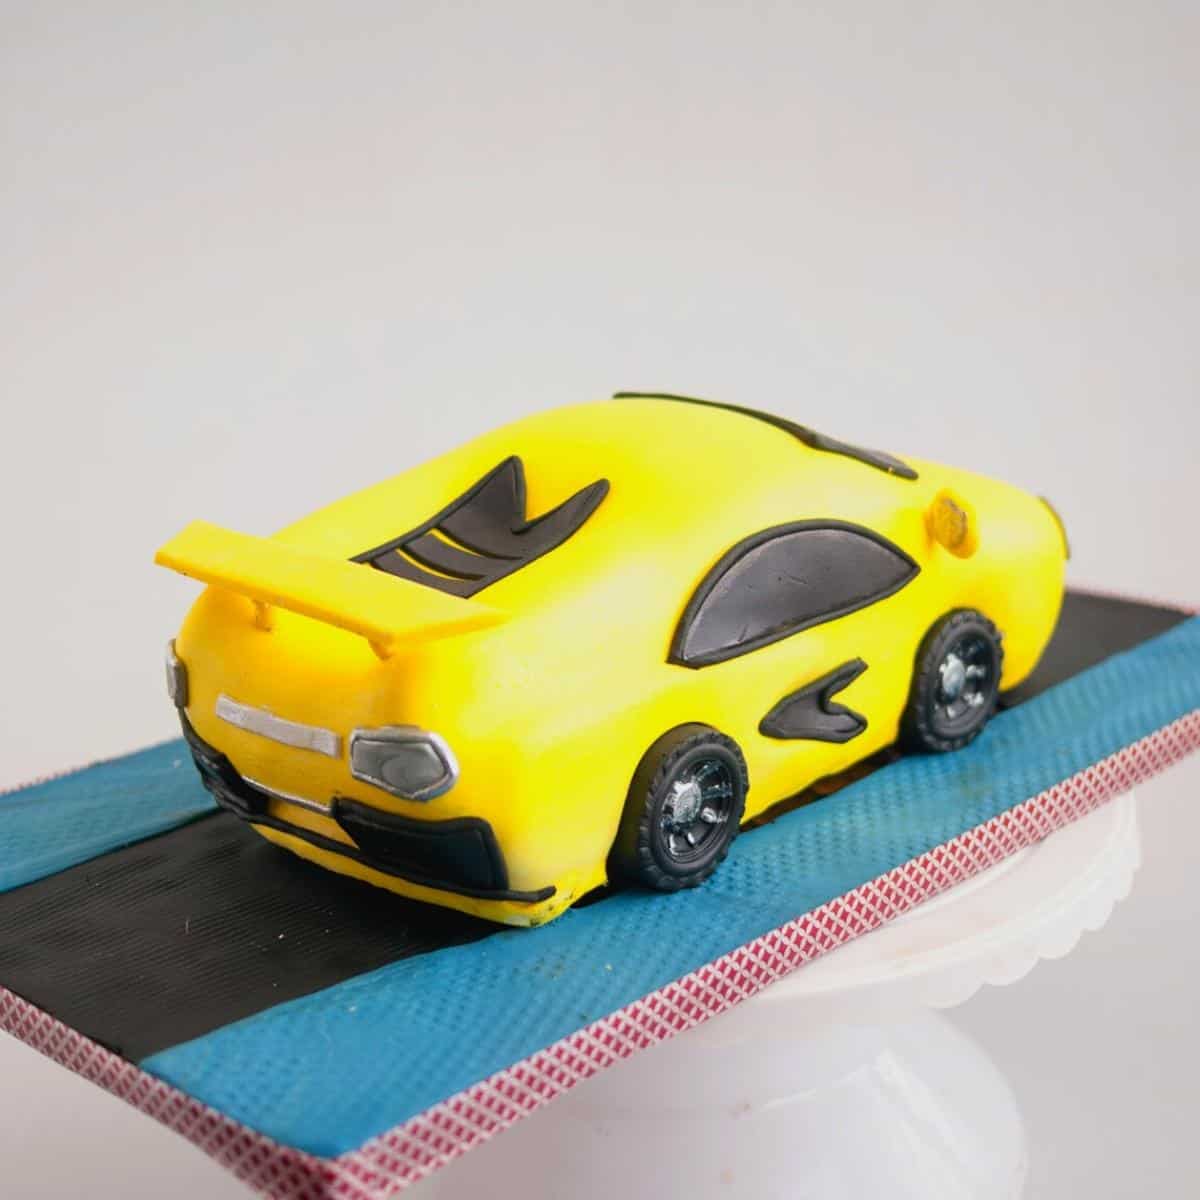 Car Cake Tutorial